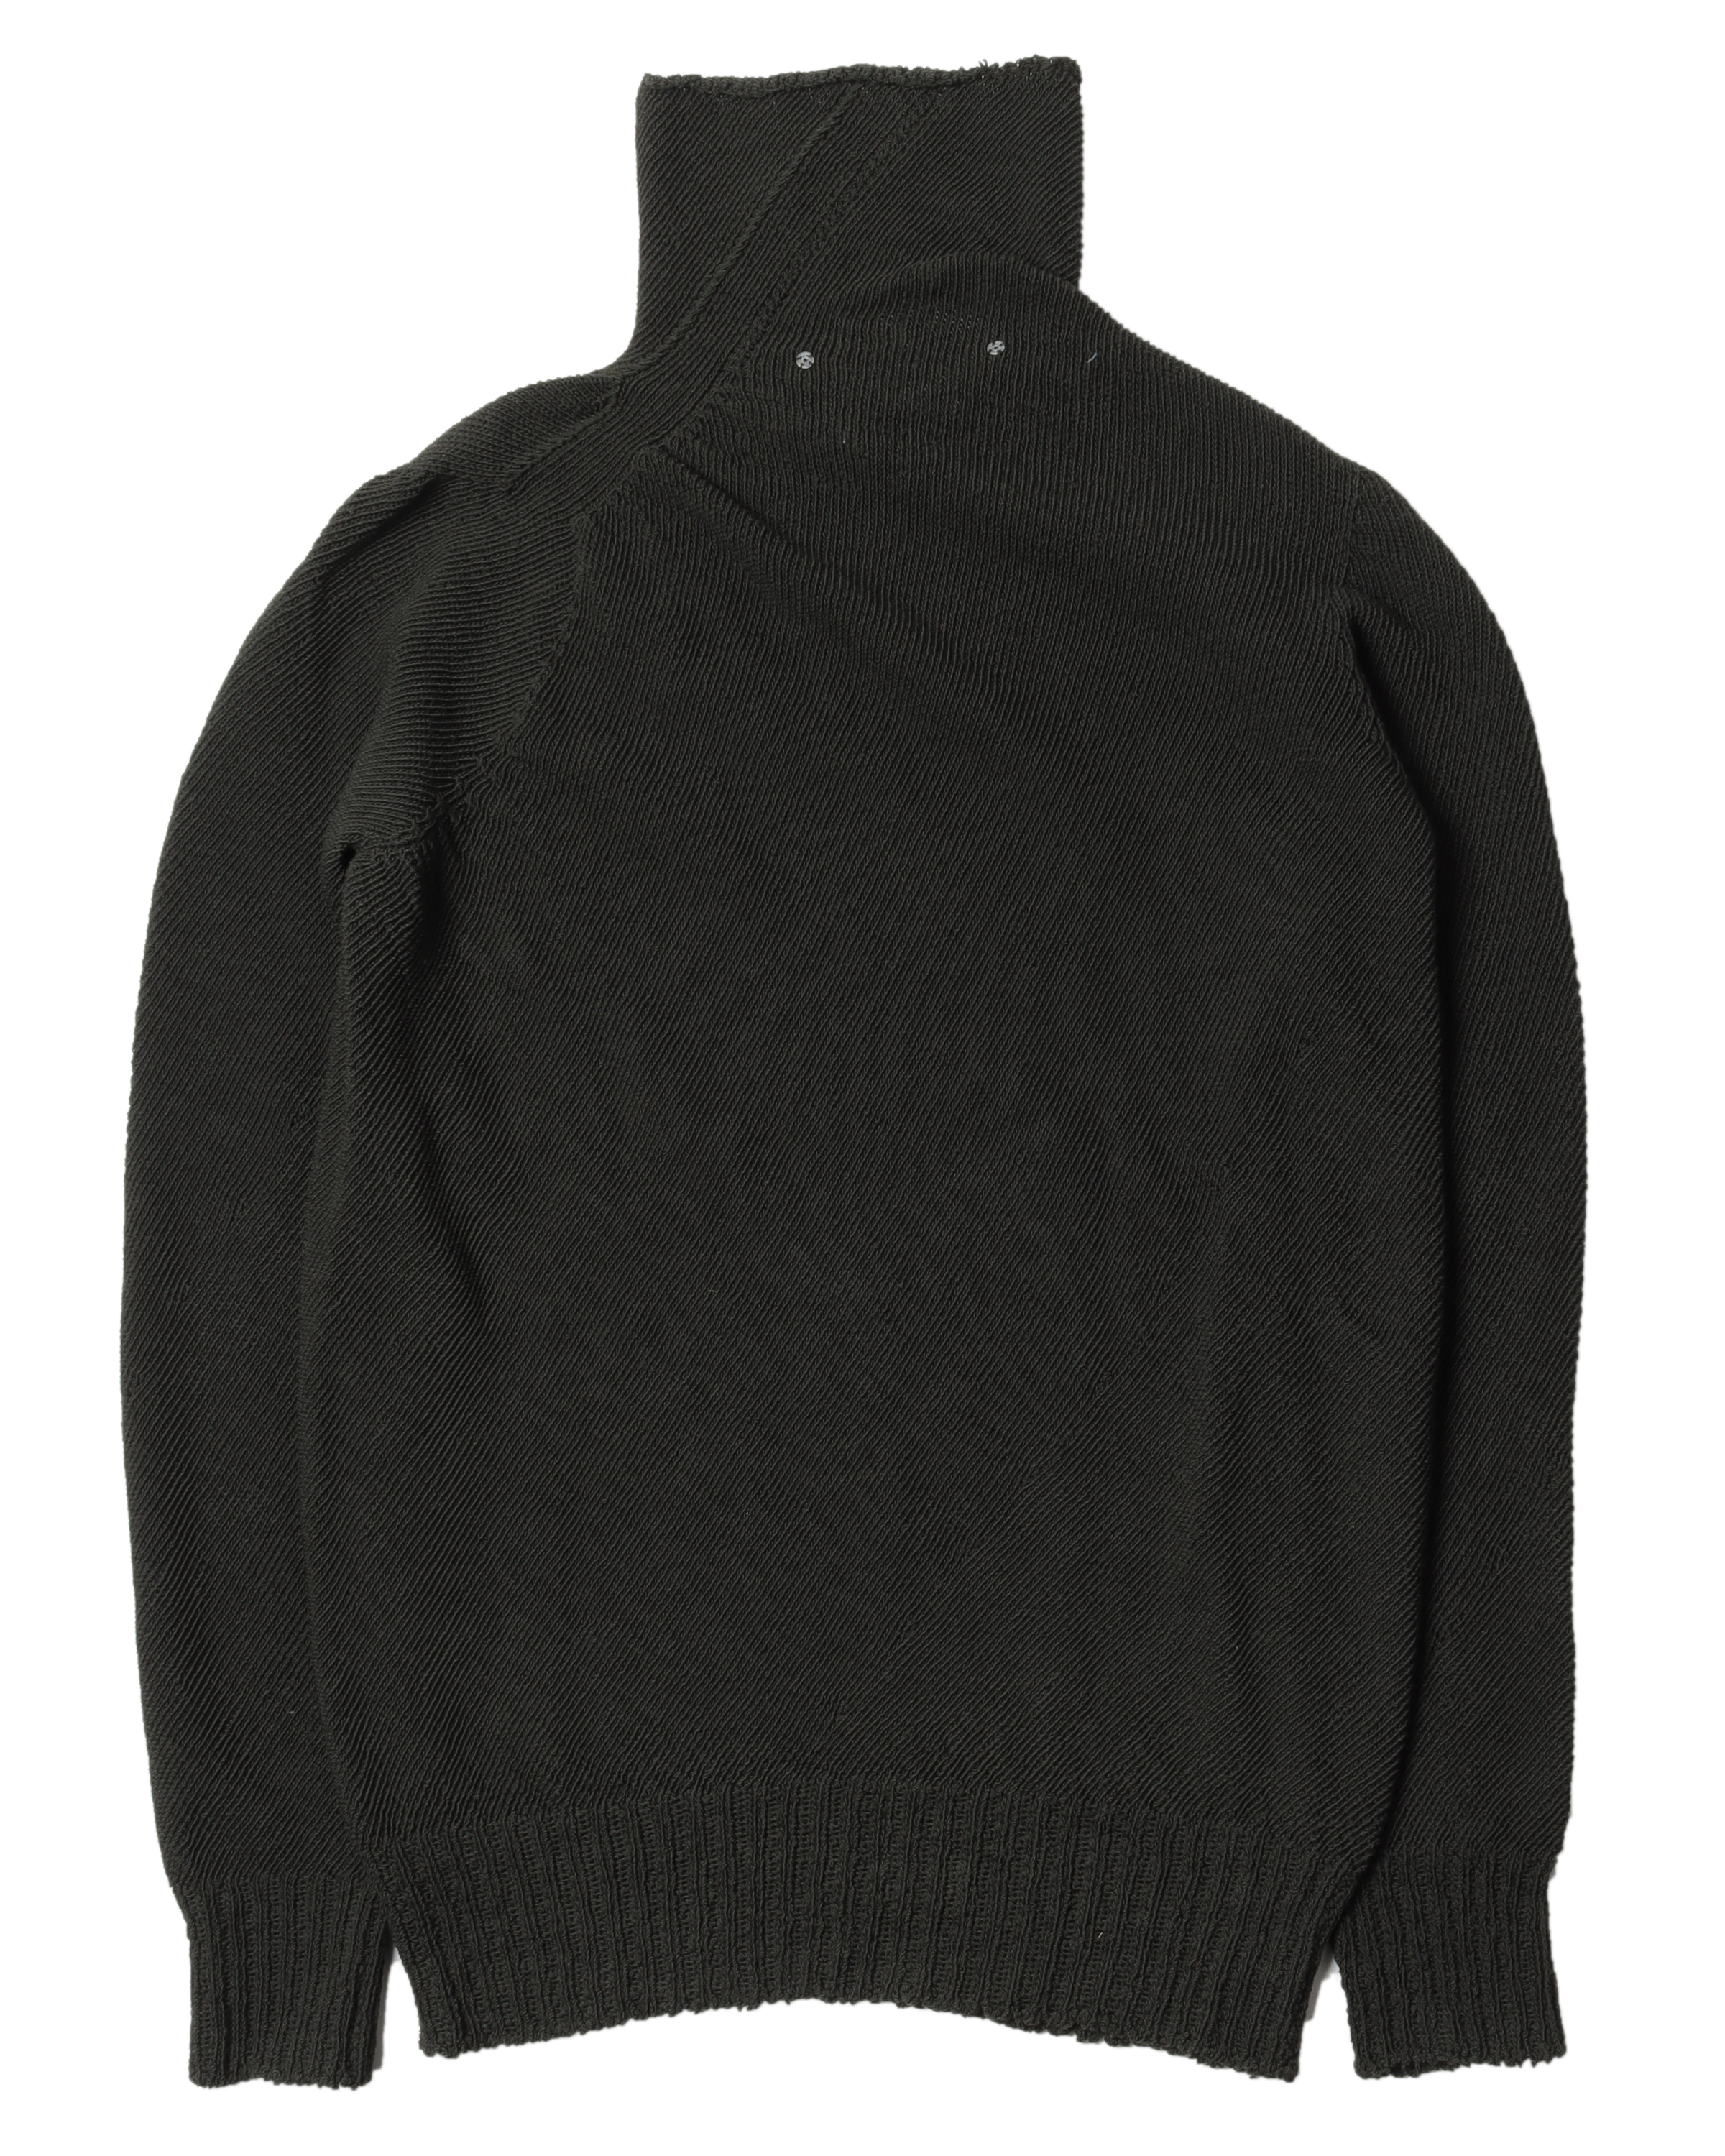 Turtleneck Sweater (KM/2630-IN PENTASIR/11)